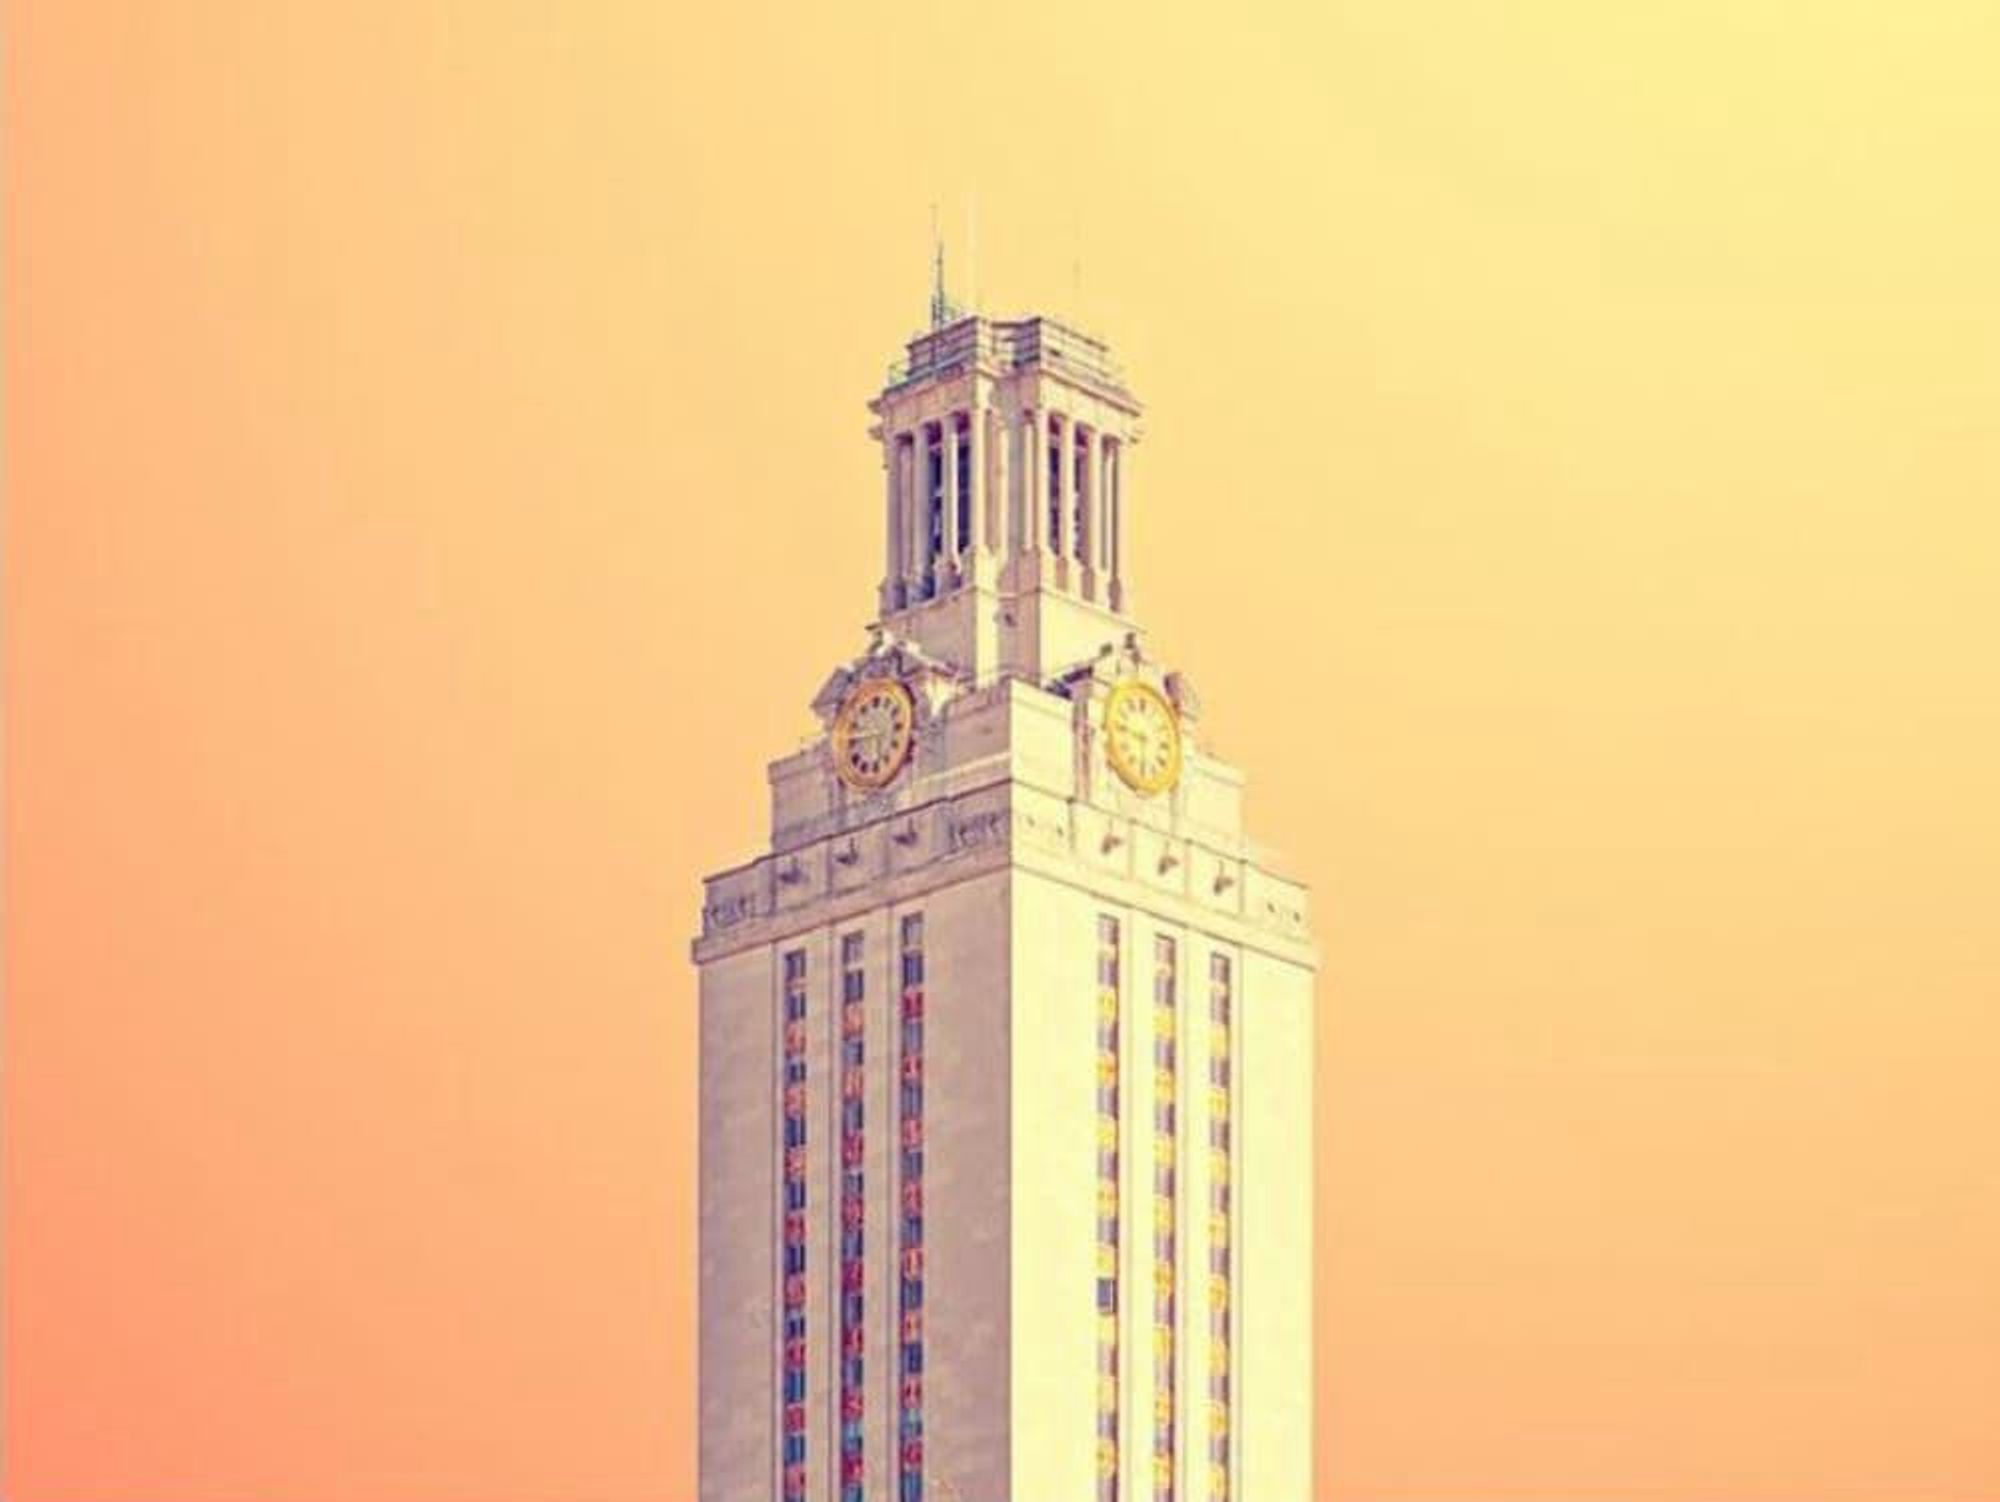 Matt Crump Austin photographer Candy Minimal University of Texas tower